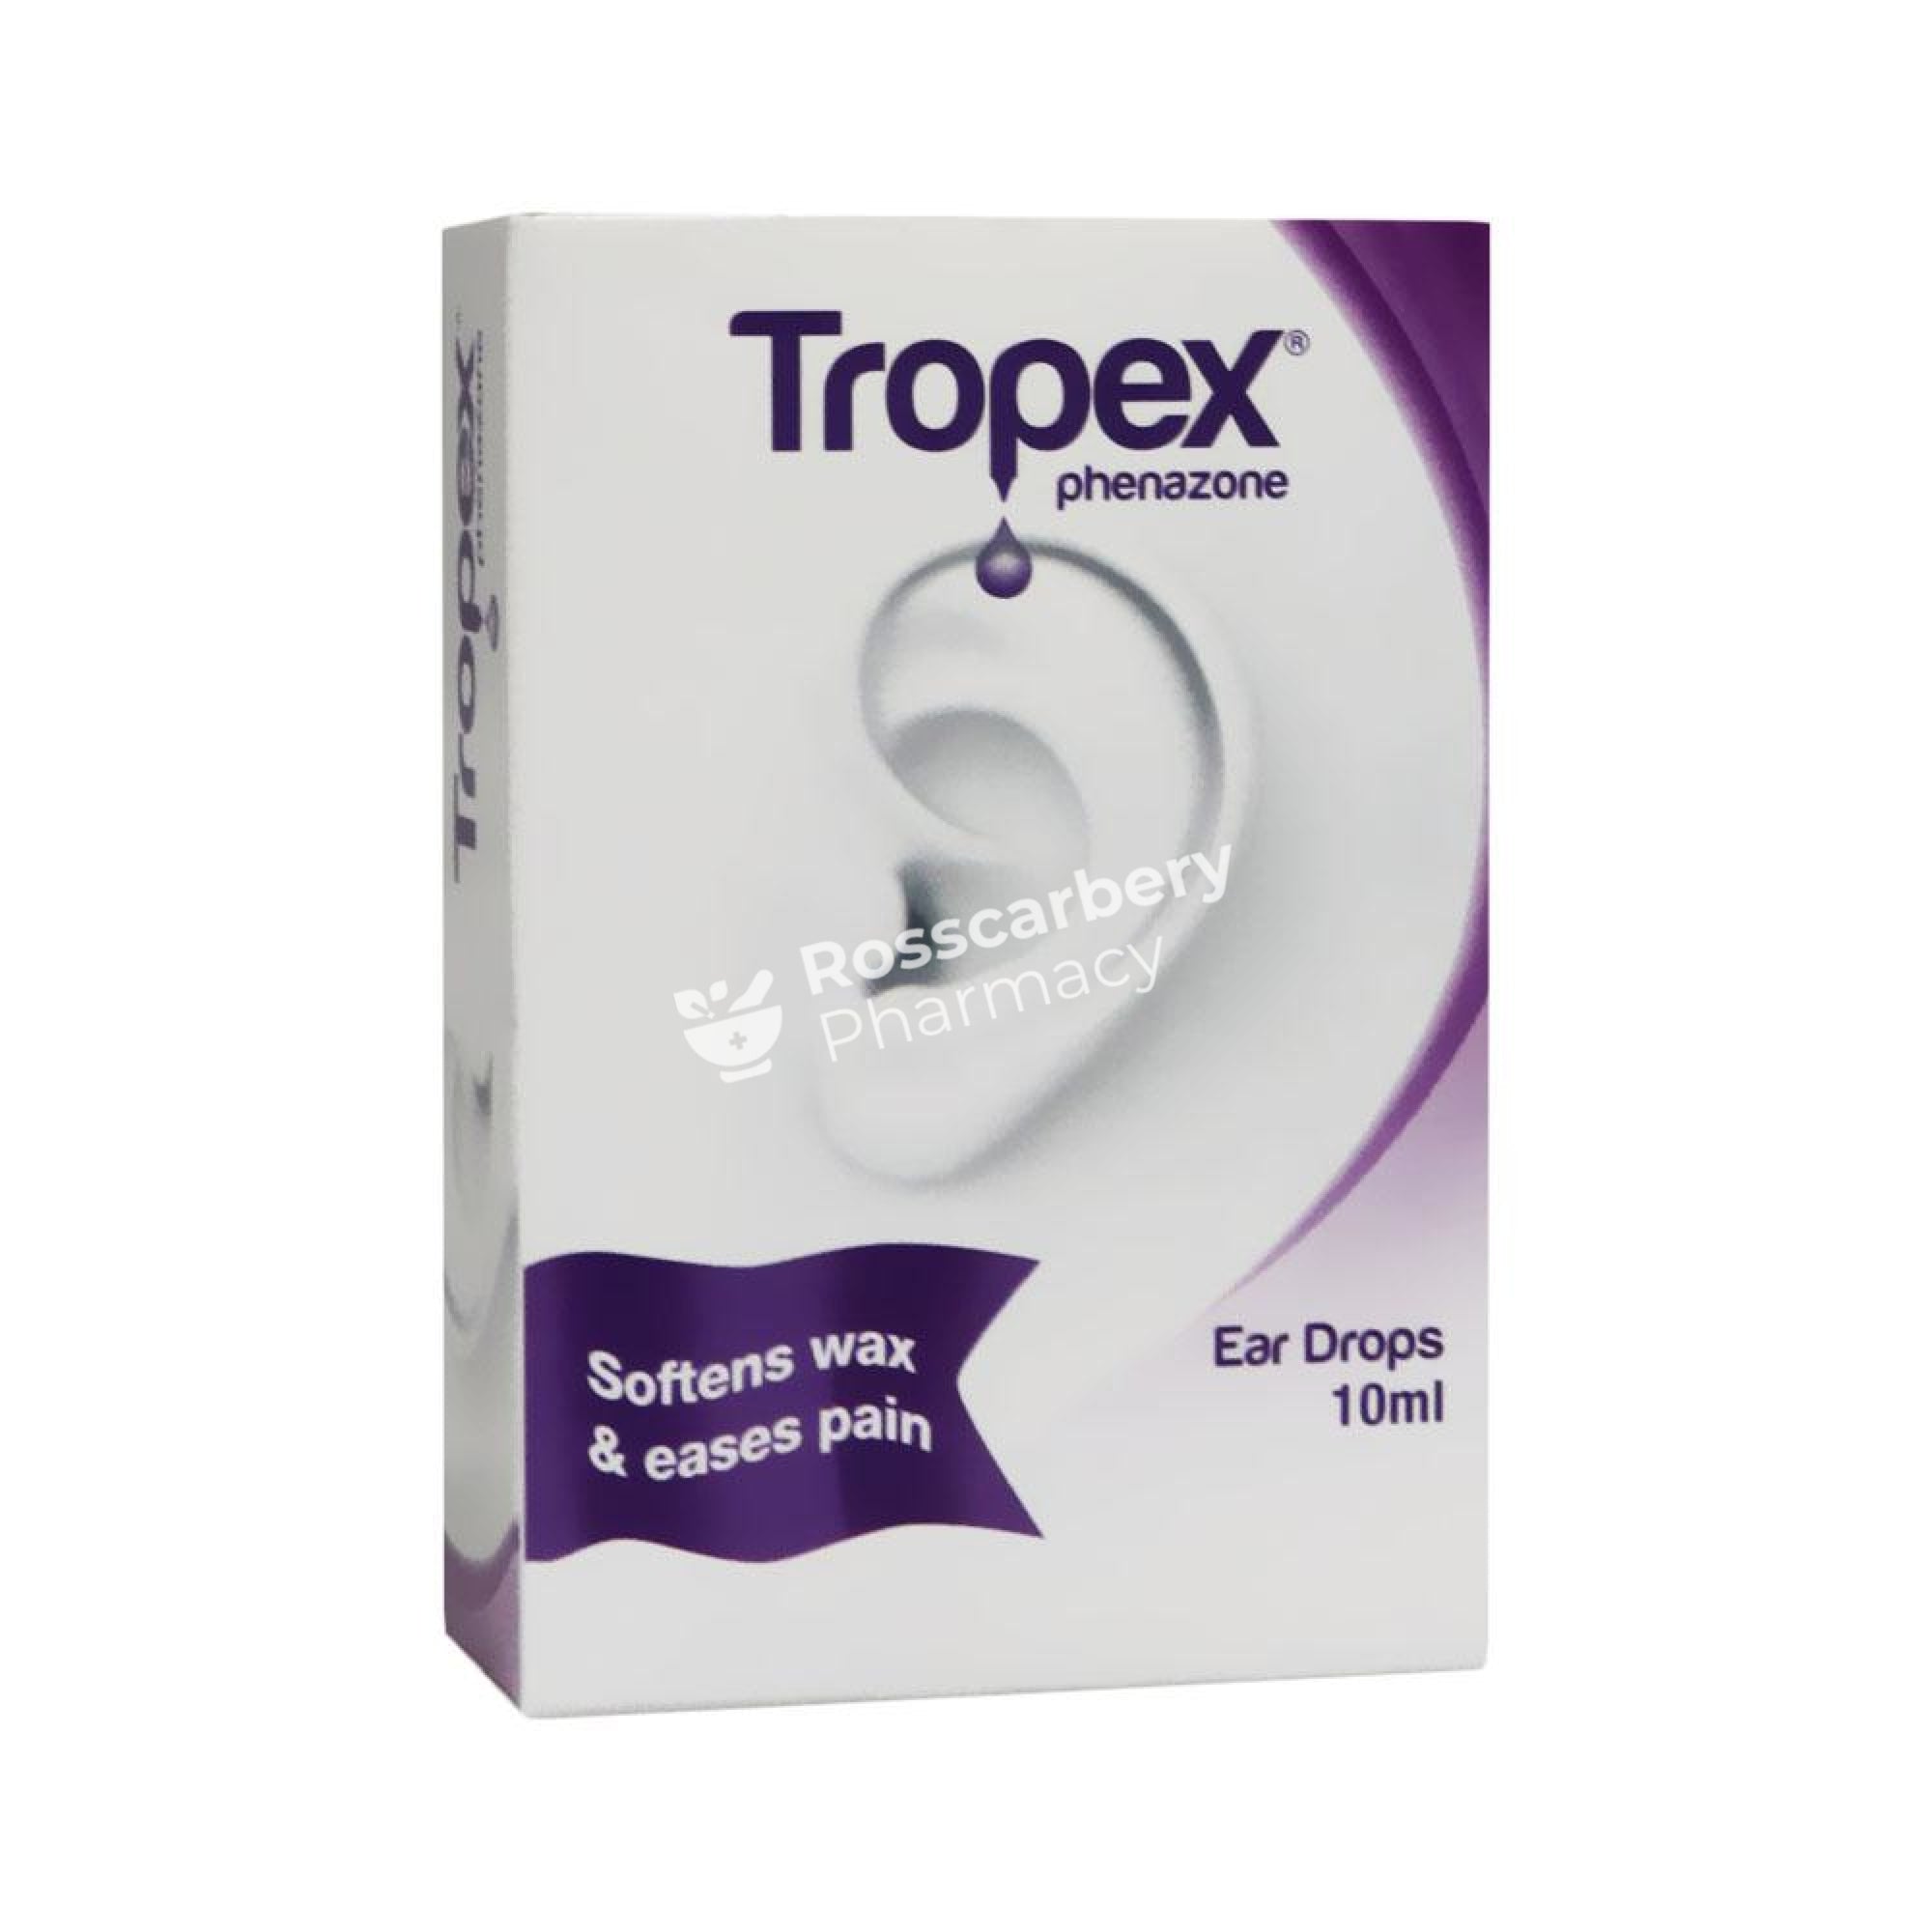 Tropex 5% W/v Ear Drops Solution Wax Treatment